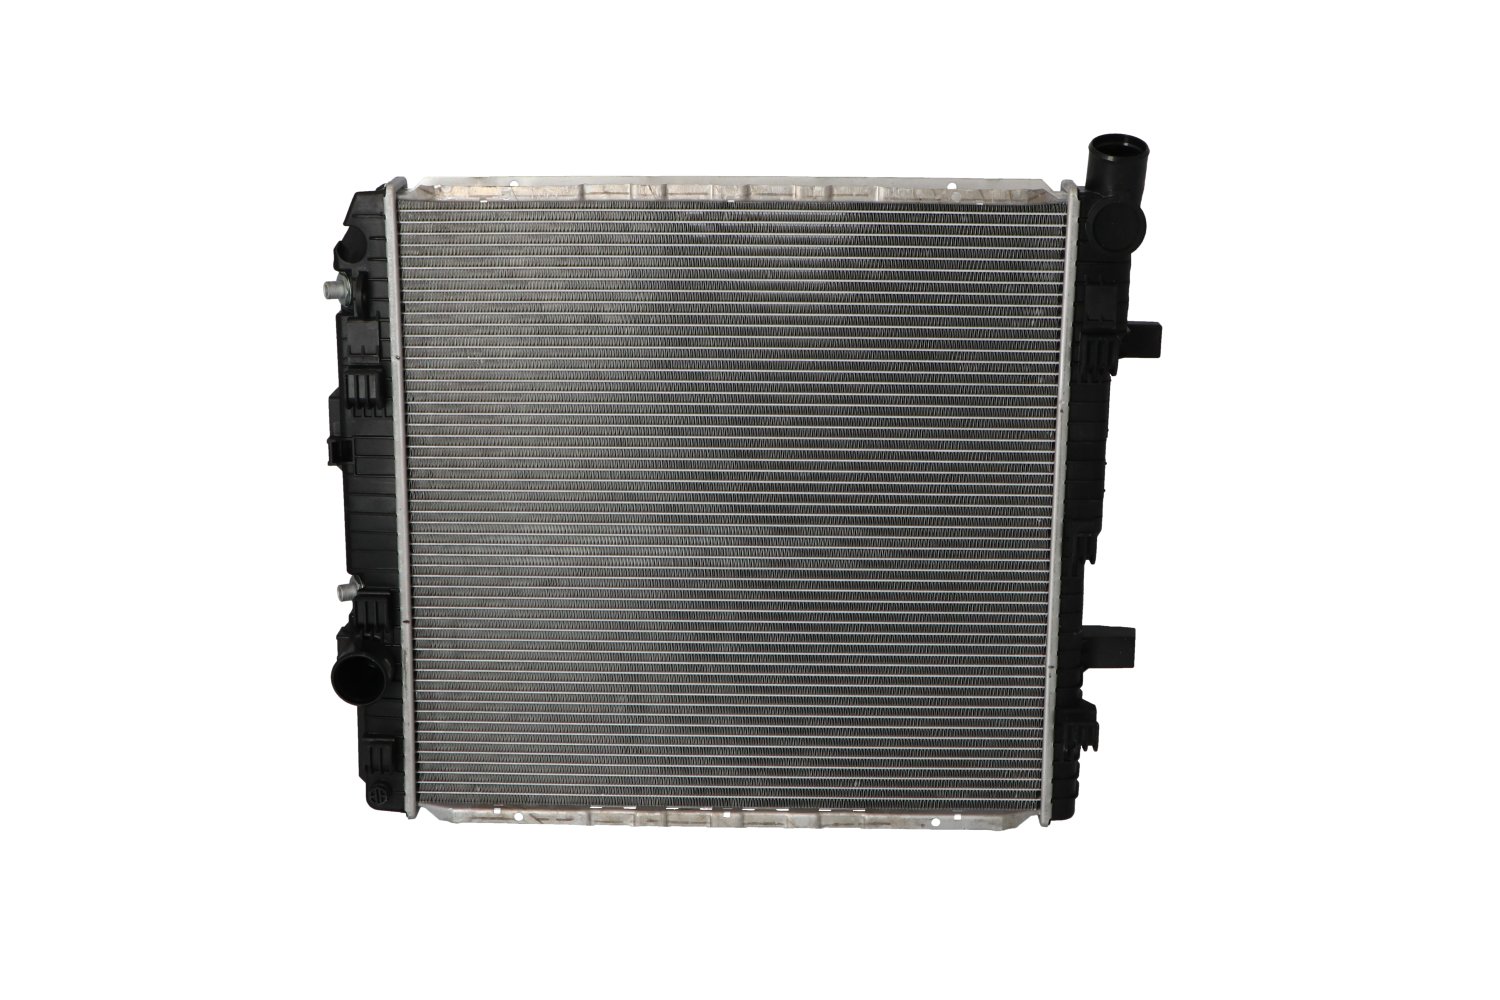 NRF 53891 Engine radiator Aluminium, 570 x 558 x 42 mm, without frame, Brazed cooling fins